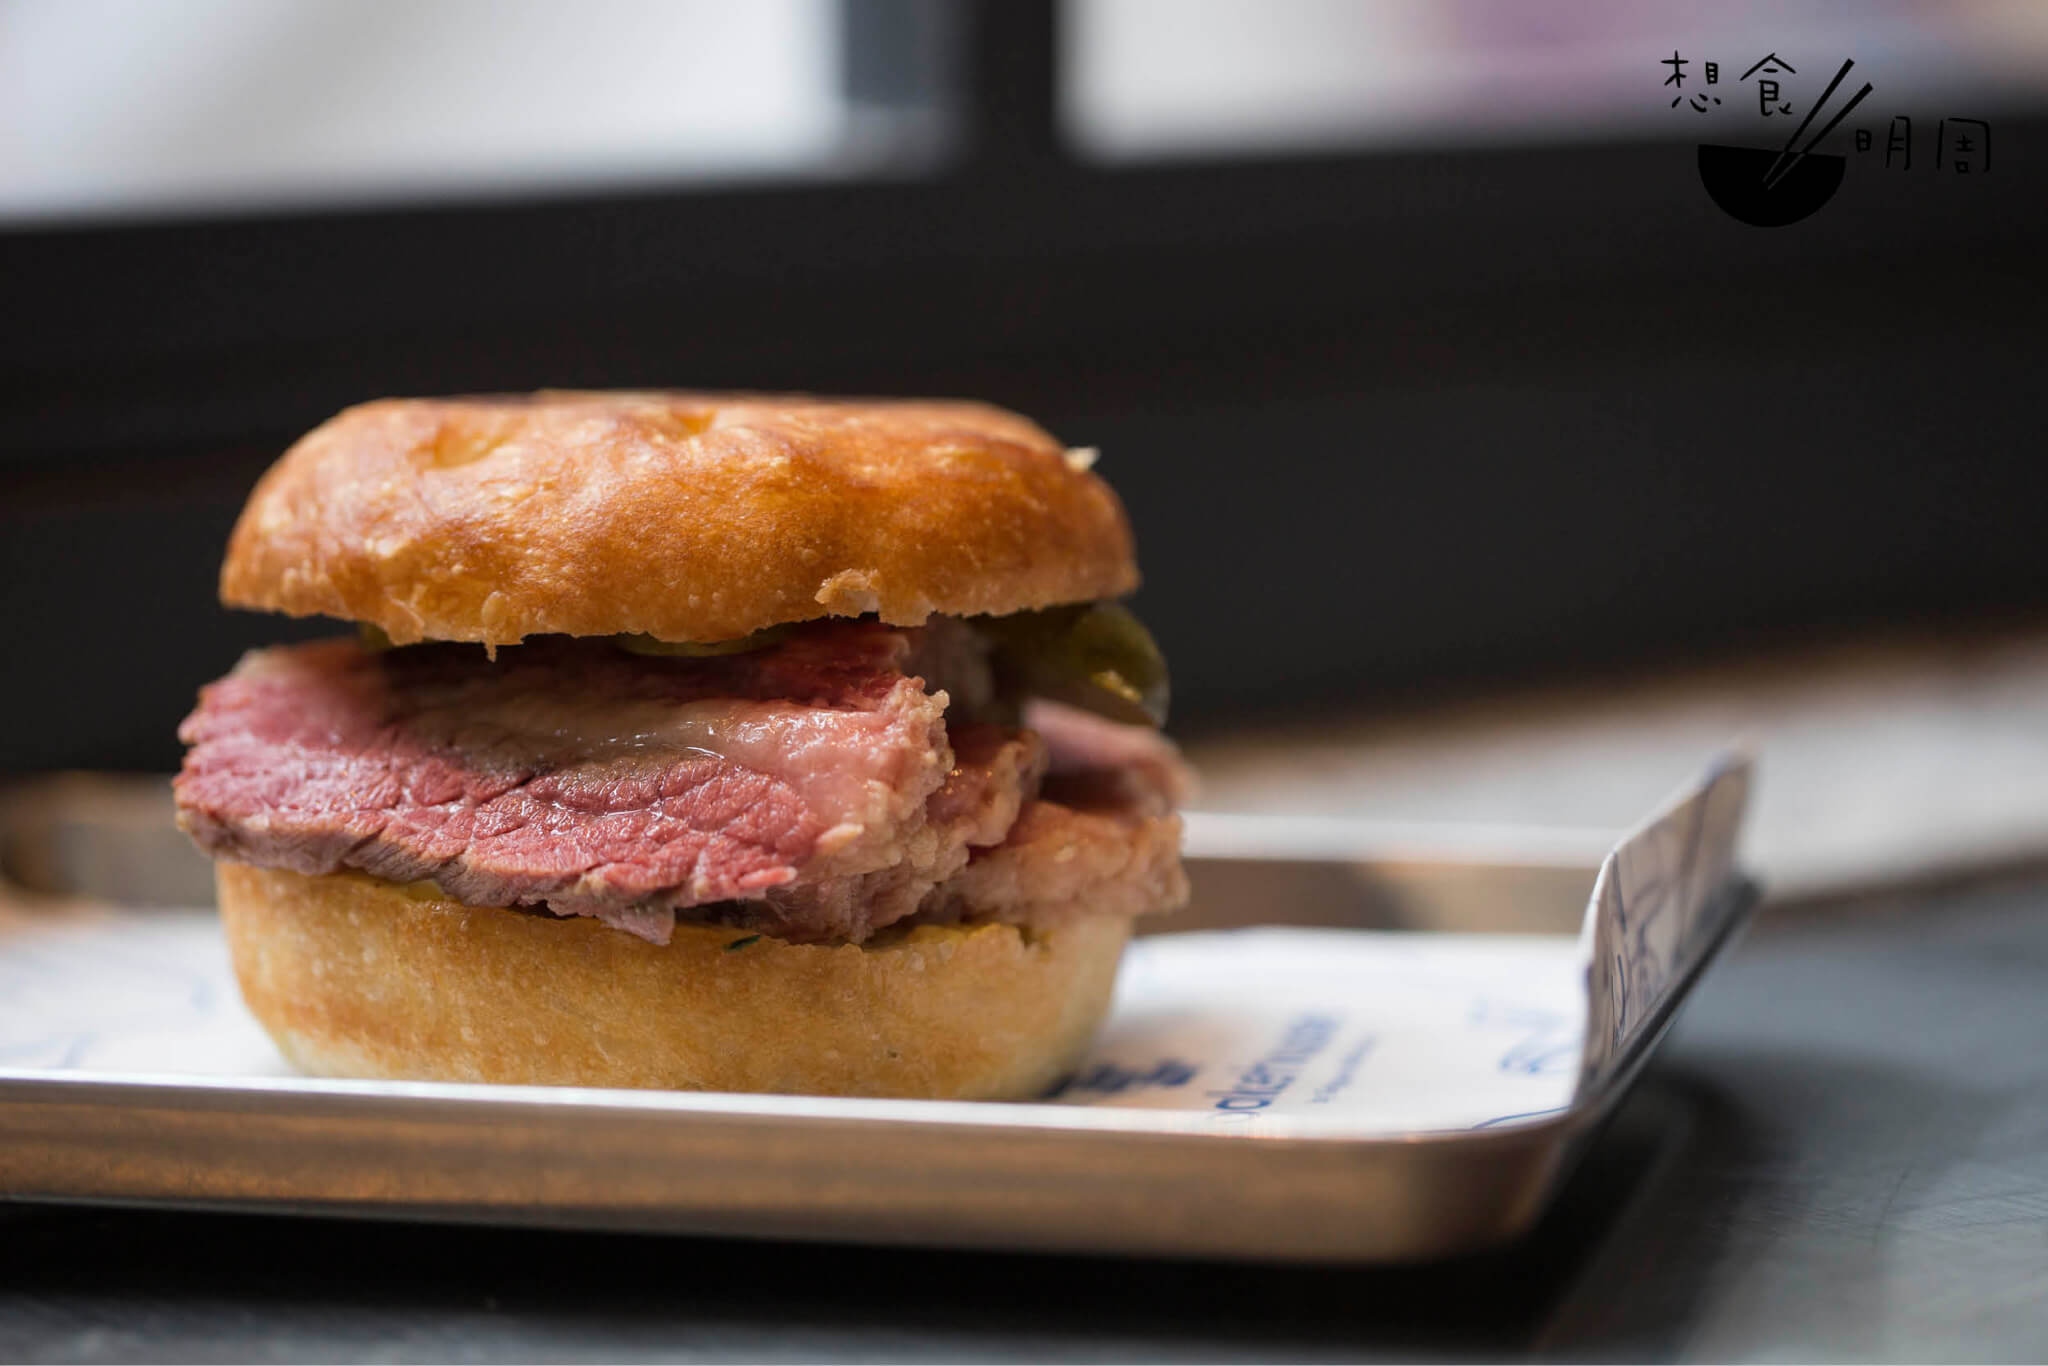 Beef Brisket Sandwich with Beef Broth // 除了一份牛腩包，還附送一碗牛骨湯。 ($88) 